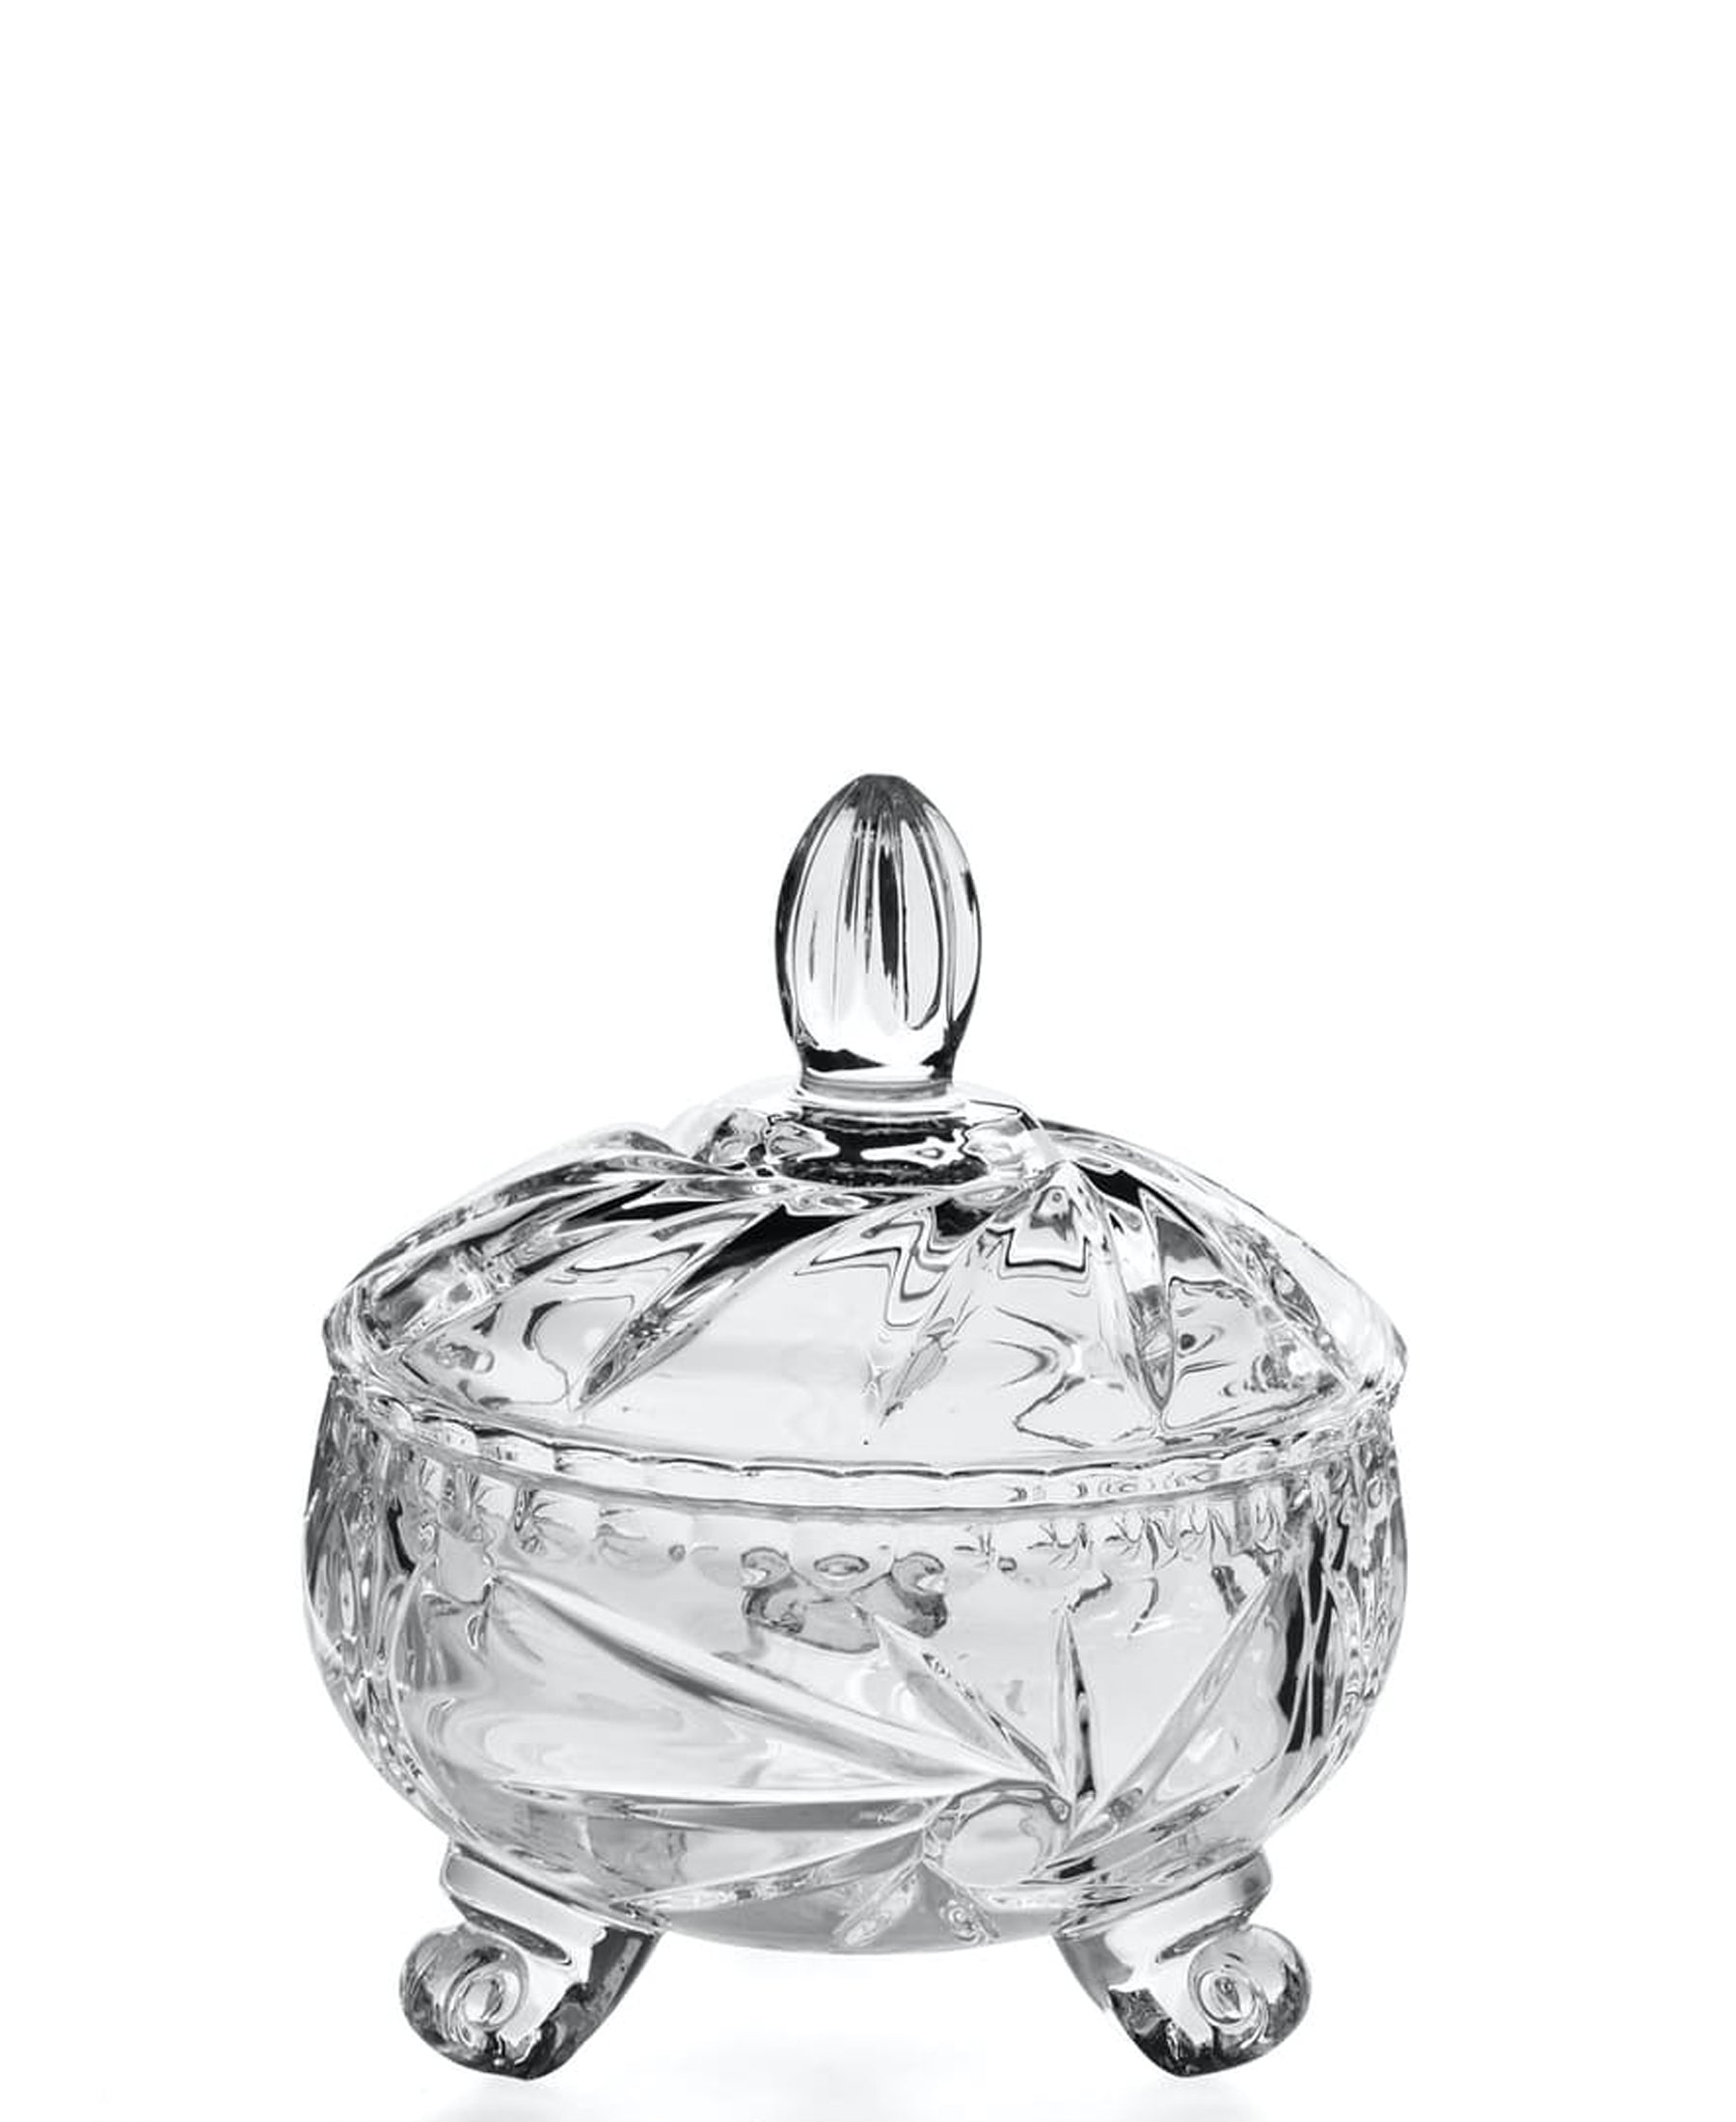 Eetrite Crystal Jar With Lid - Clear